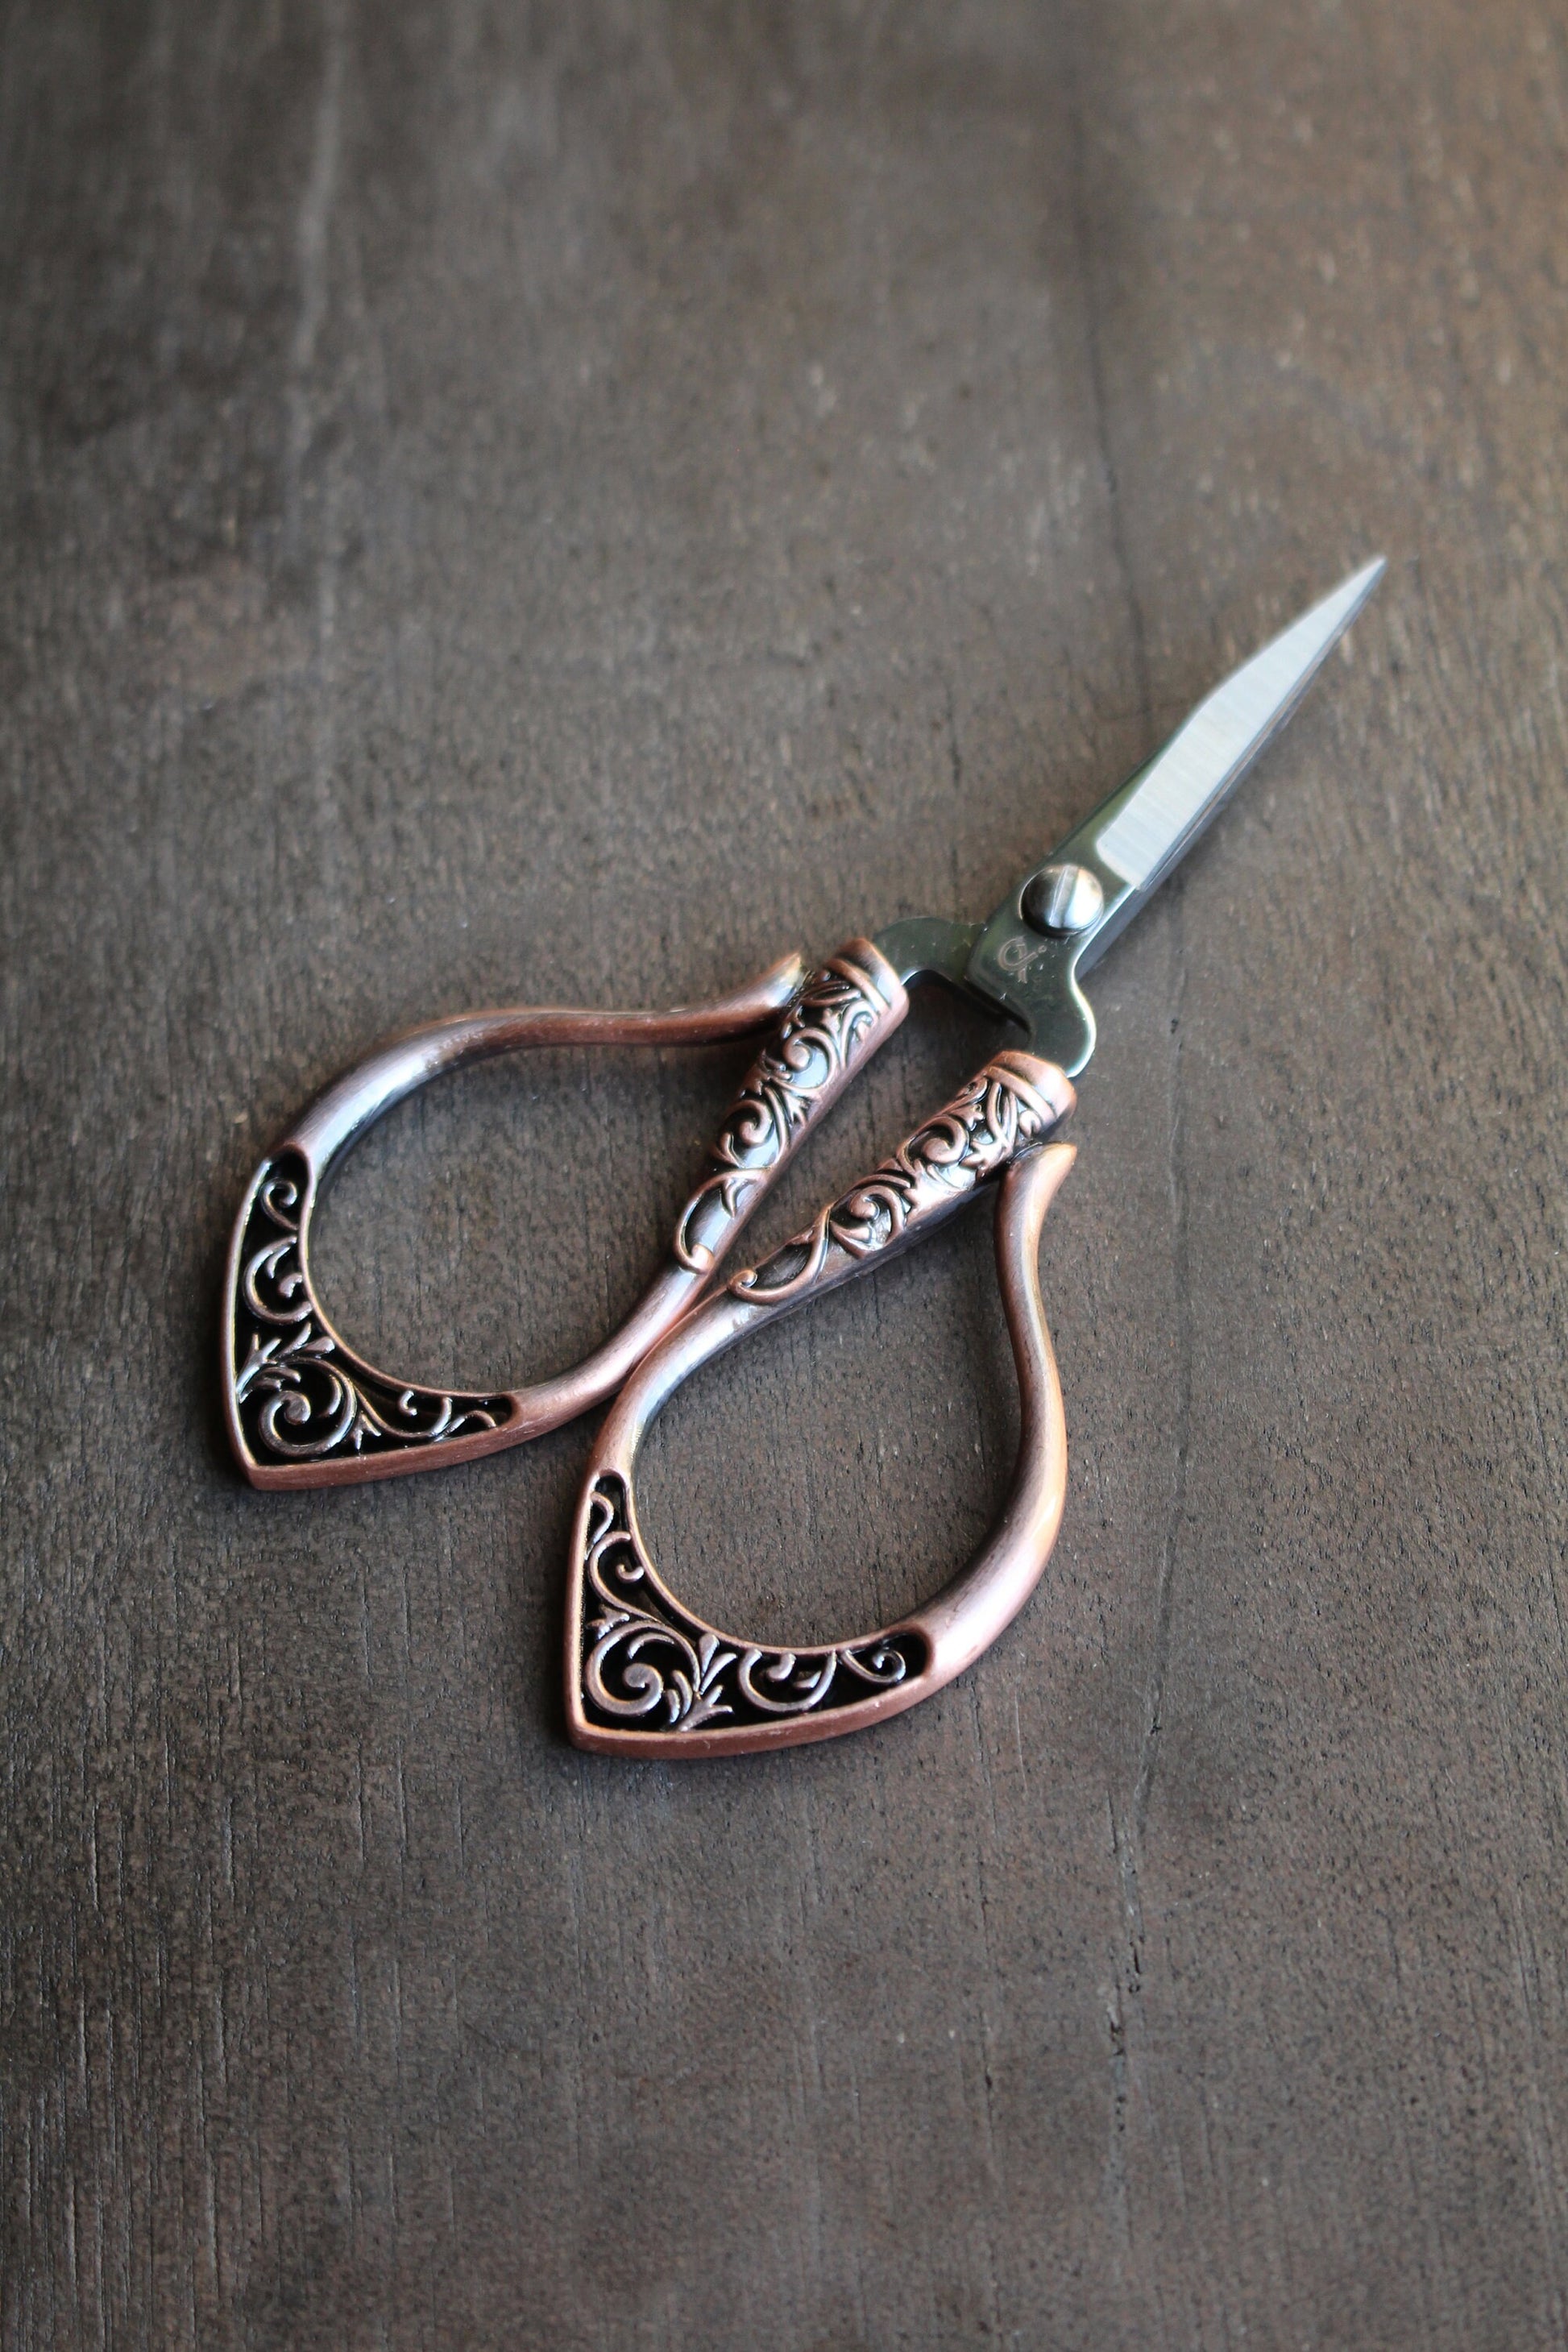 Secret Garden embroidery scissors in antique copper